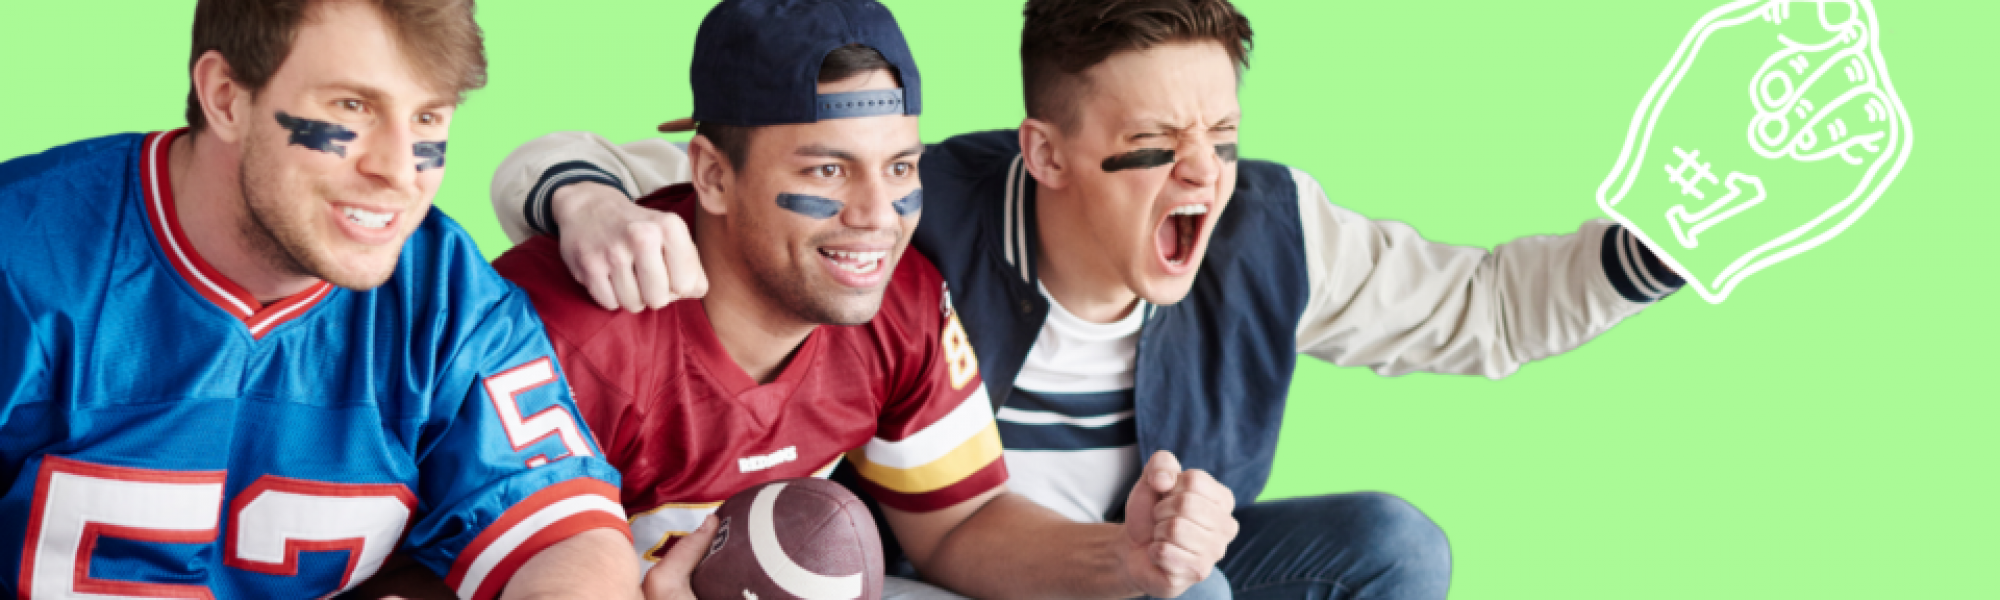 Three men wearing football jerseys cheering at the TV